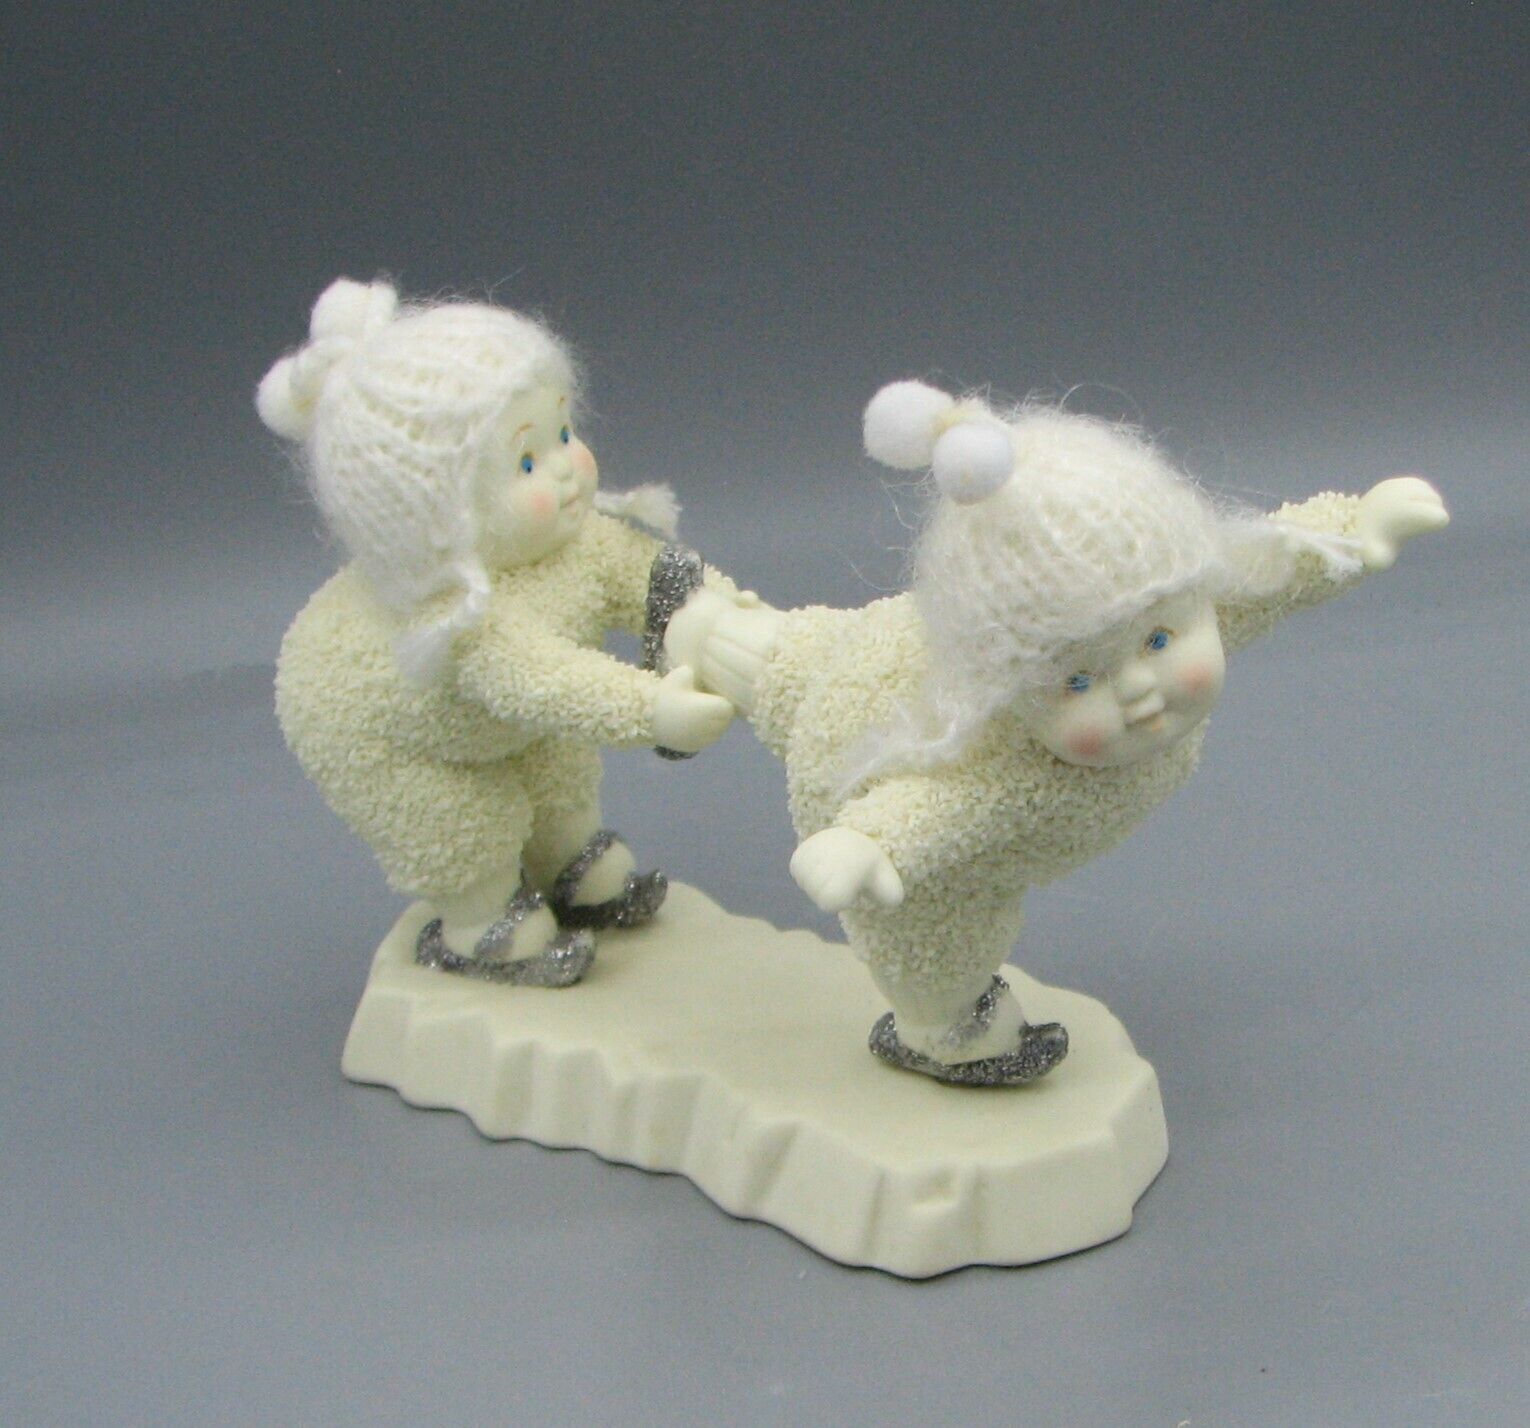 Vintage Dept. 56 Snowbabies “Along For The Ride” Figurine #3553 